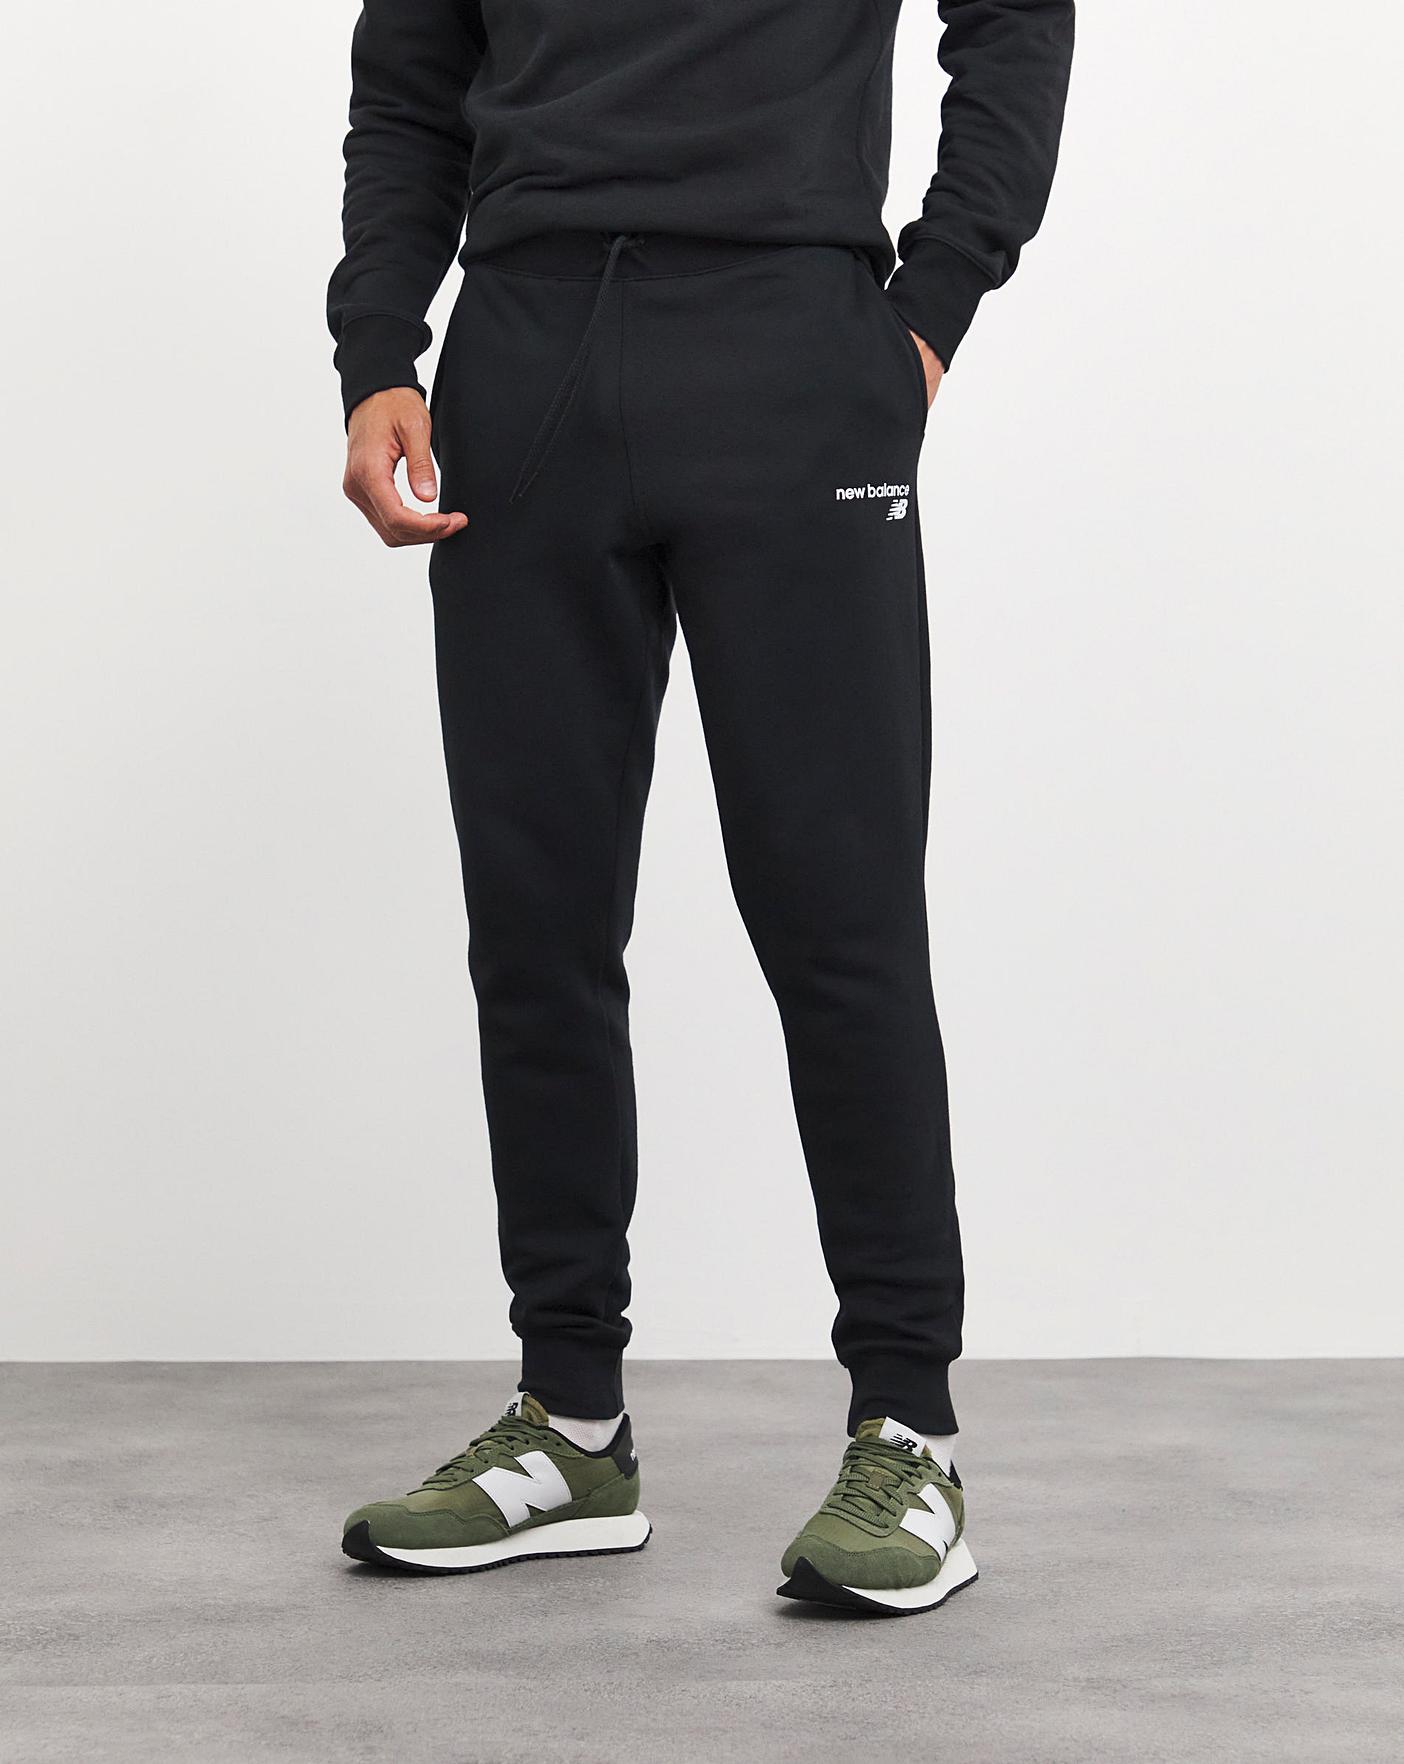 New Balance Men's NB Classic Core Fleece Pant, Pigment, X-Large :  : Clothing, Shoes & Accessories